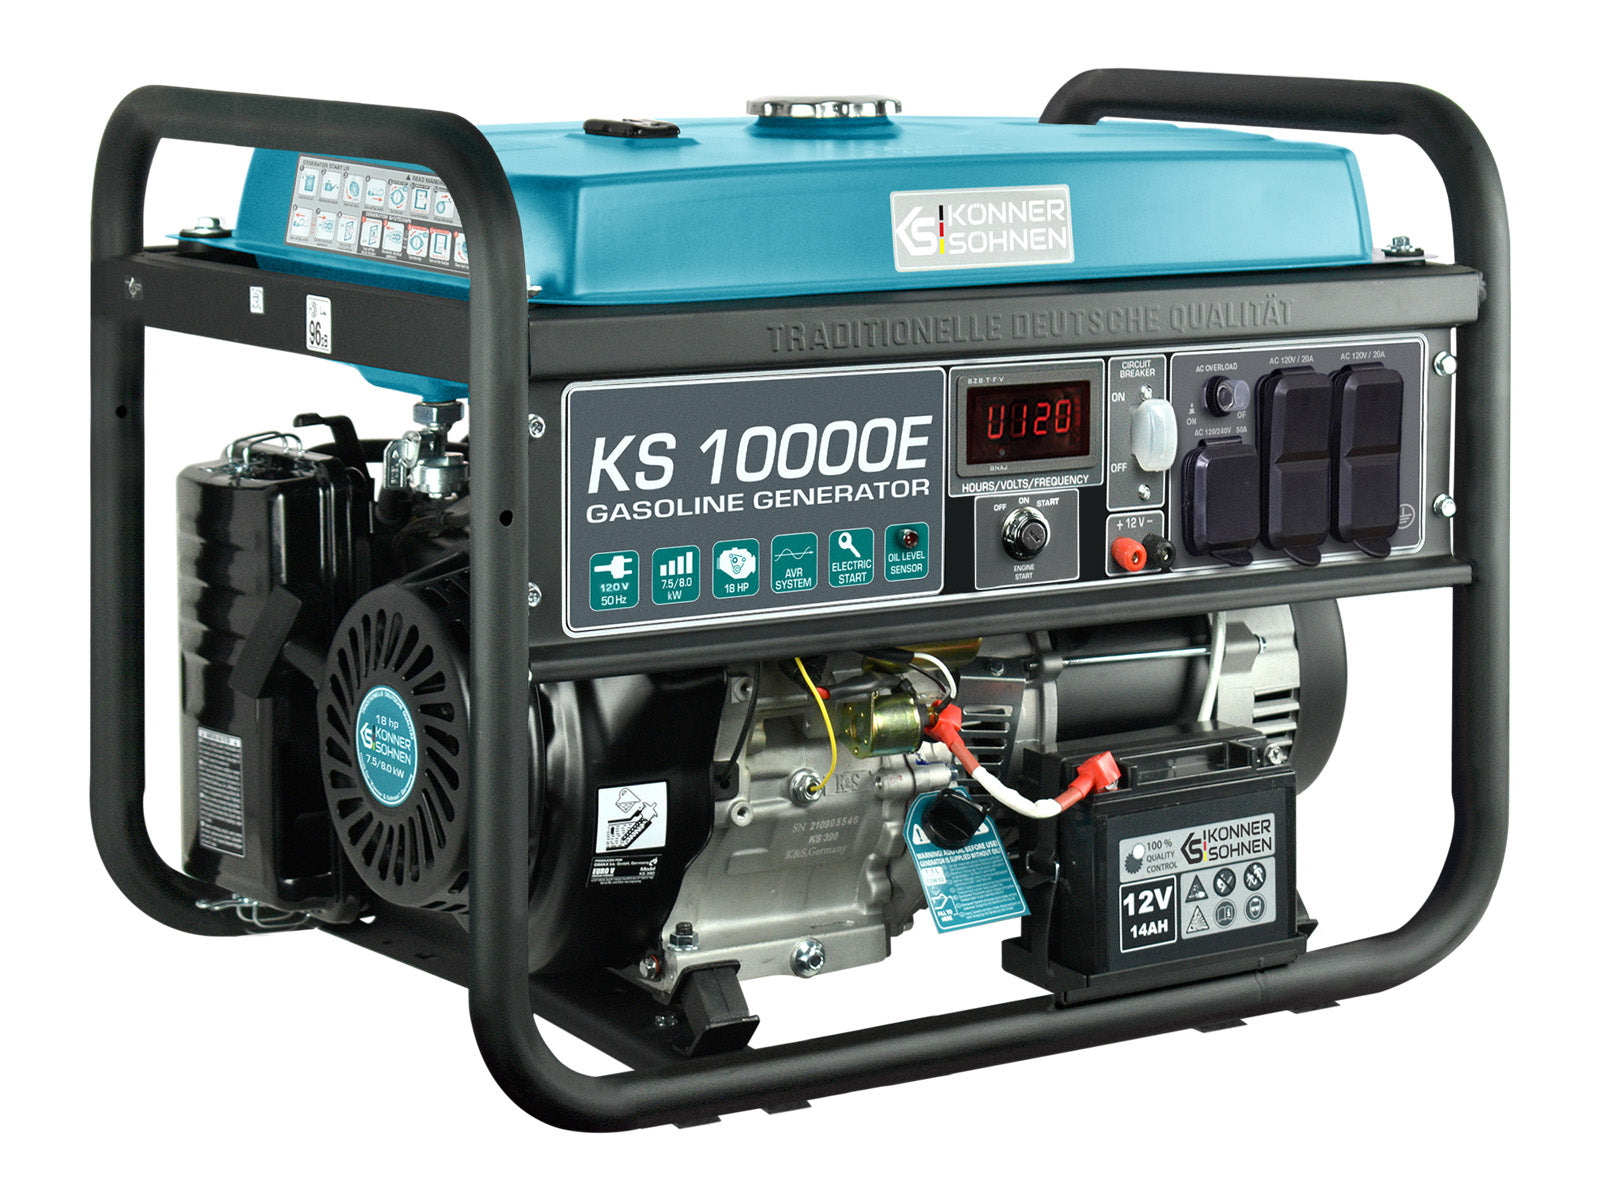 Gasoline generator KS 10000E